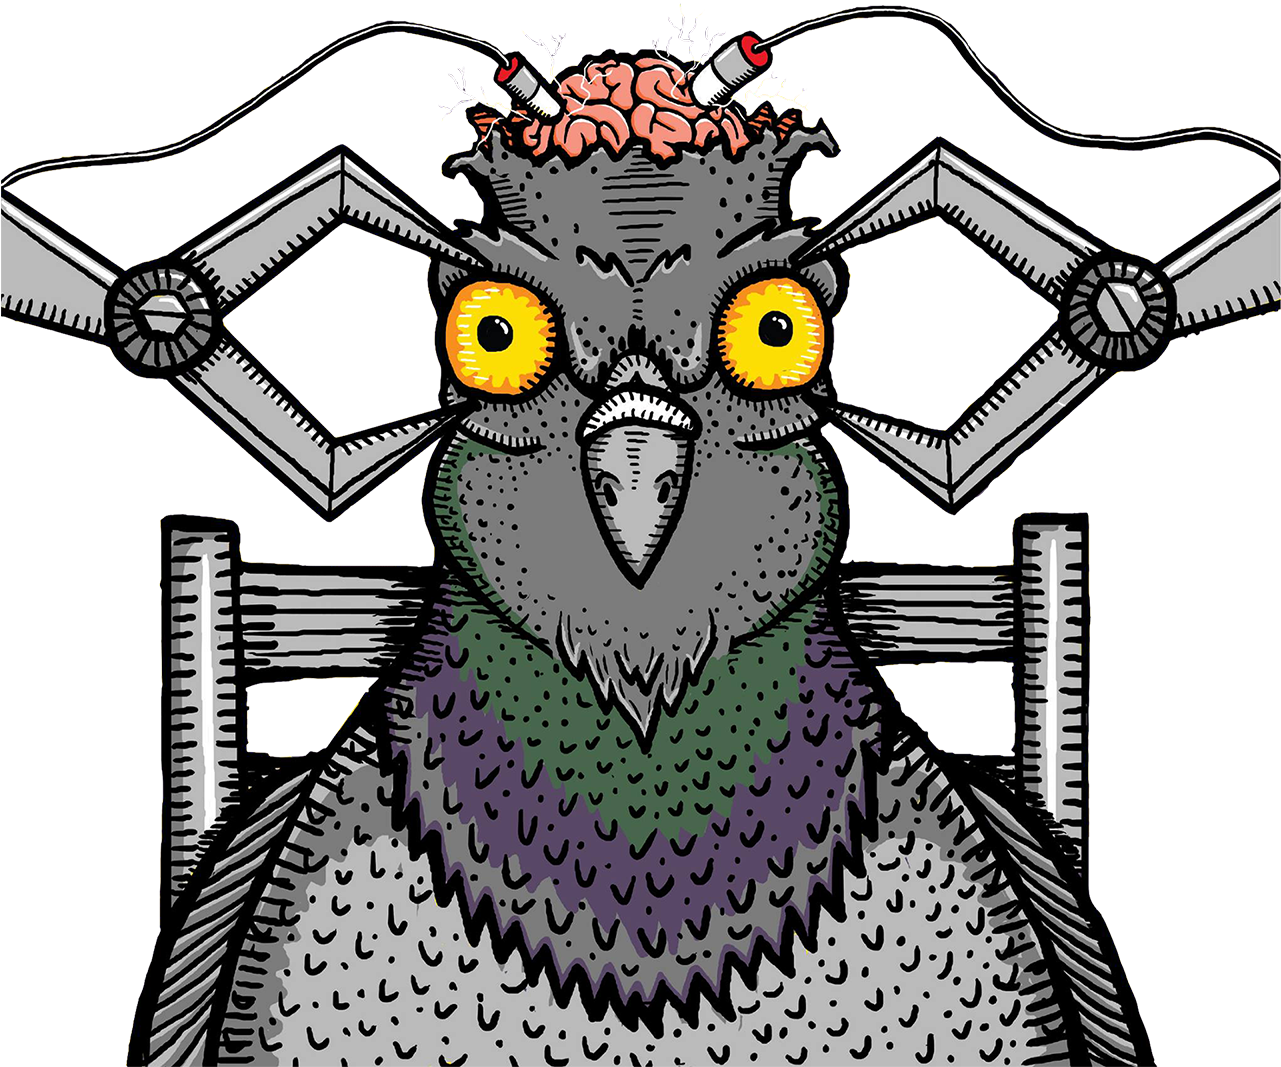 A Cartoon Of A Bird With A Brain In Its Head